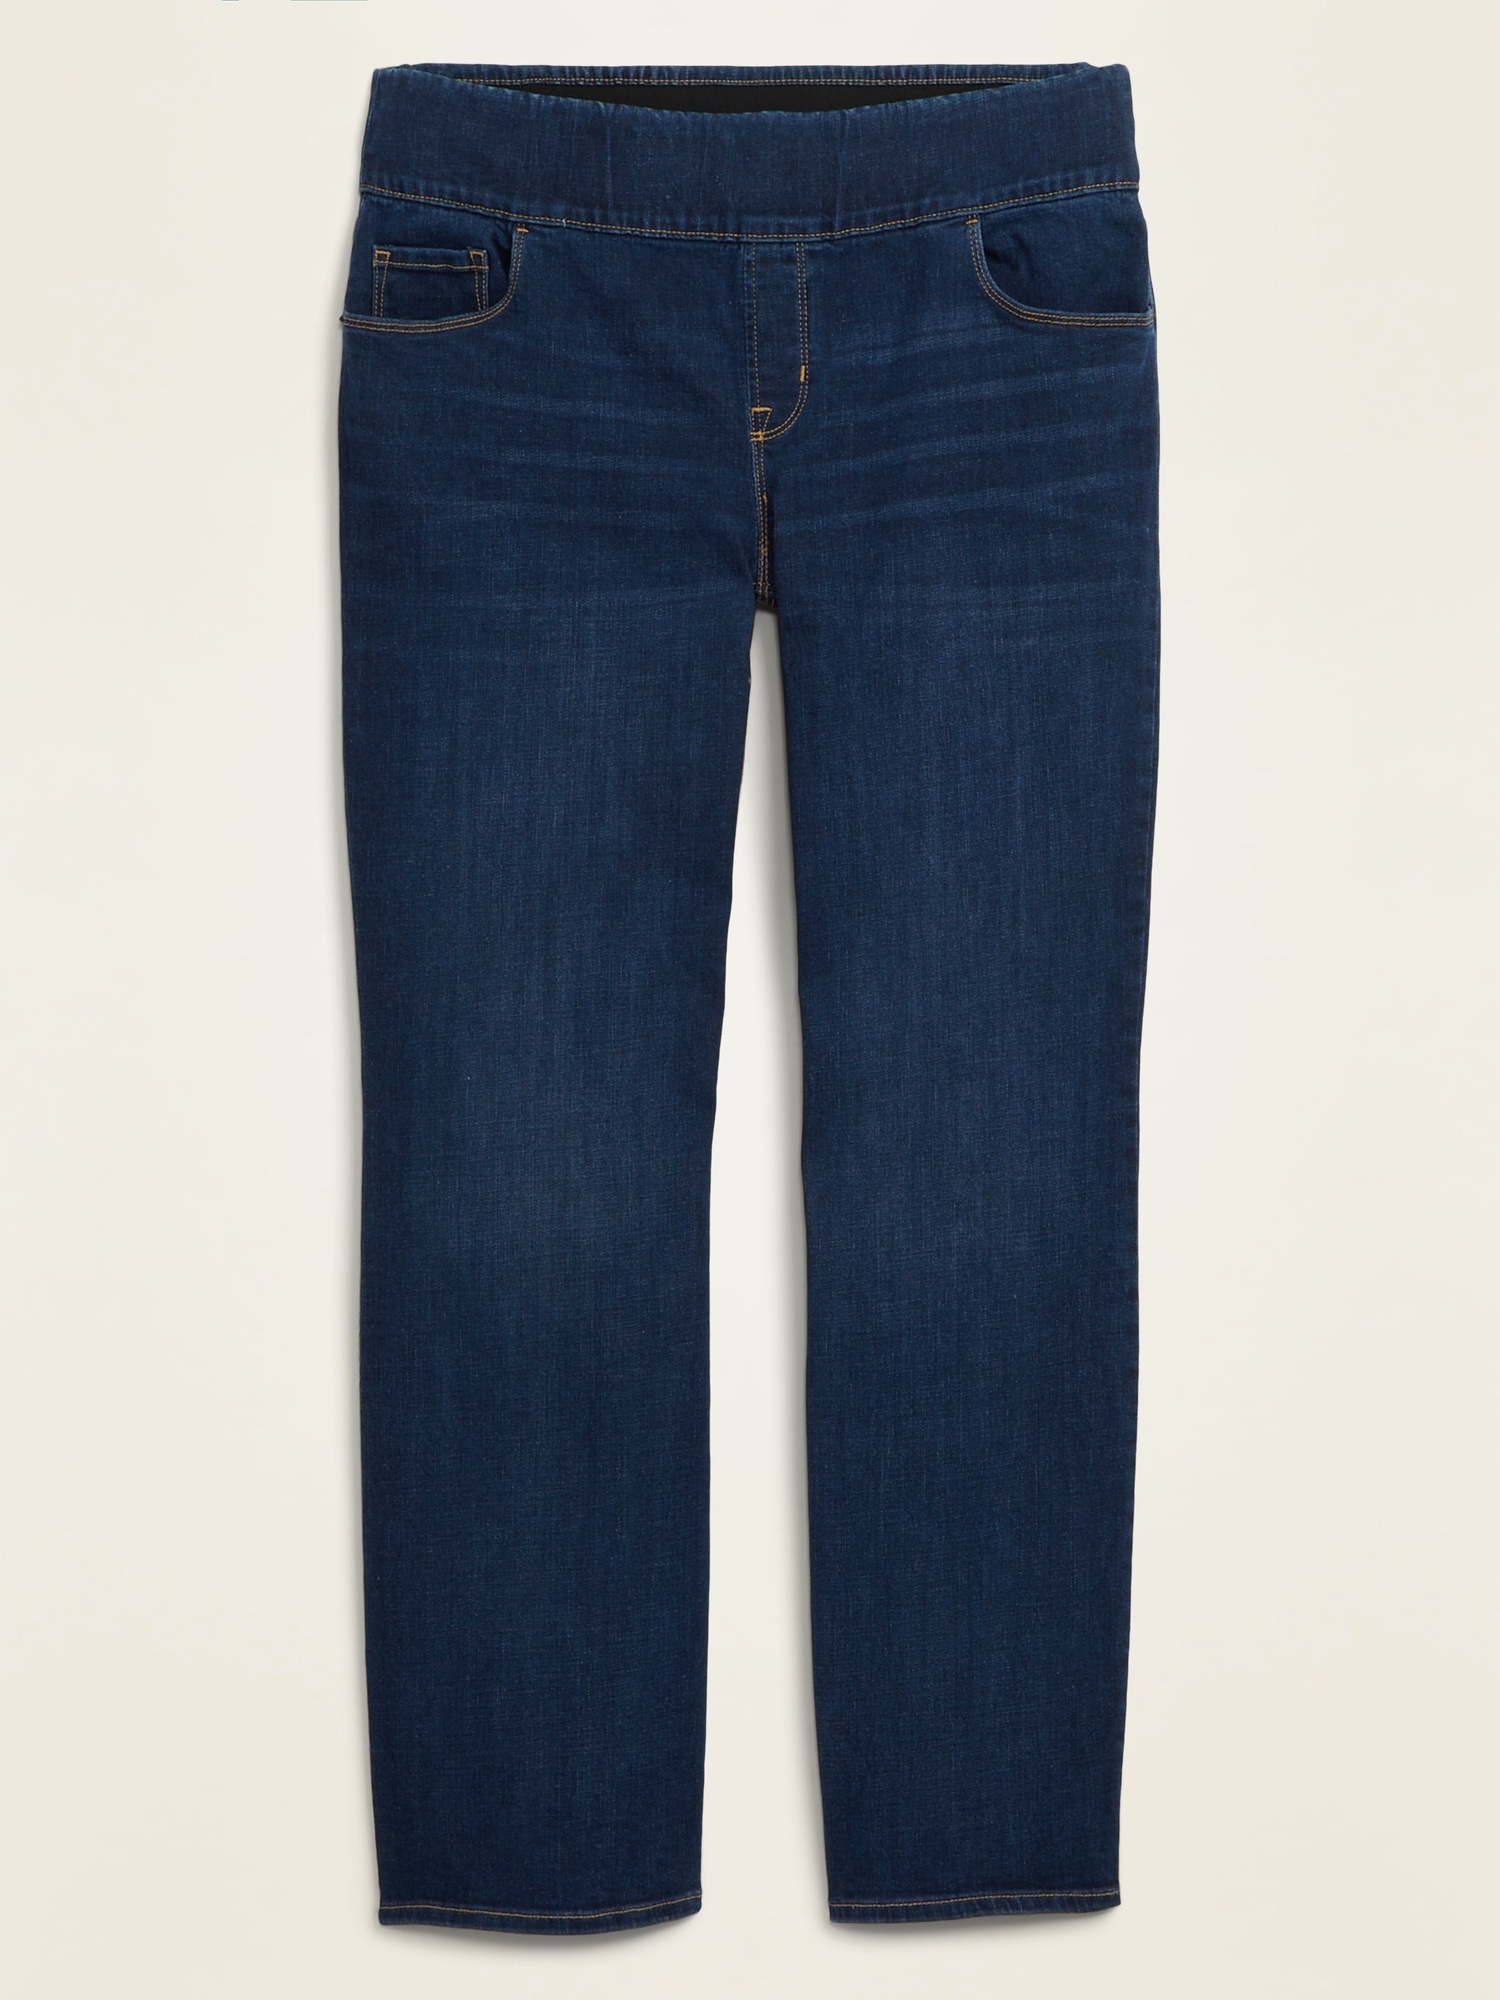 old navy stretch waist jeans